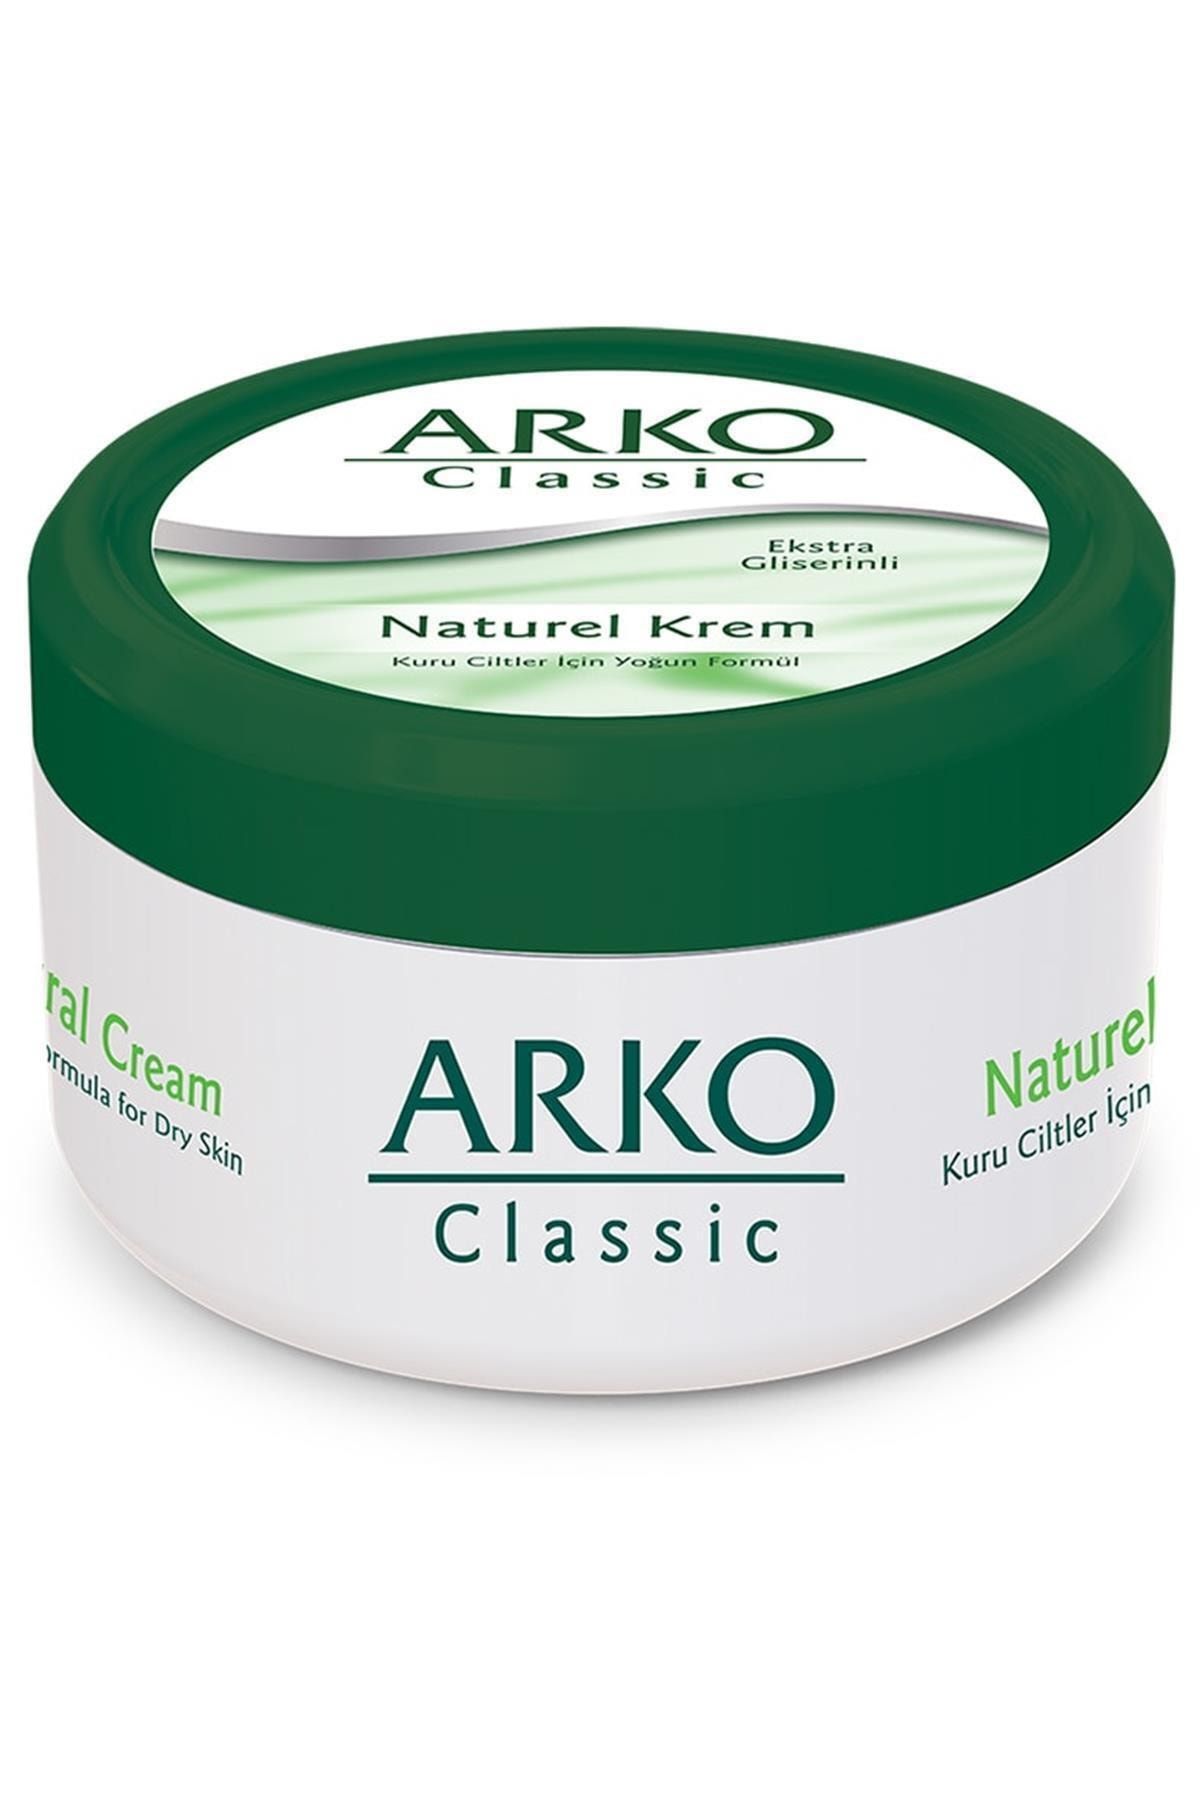 Arko Klasik Natural Krem 100 ml